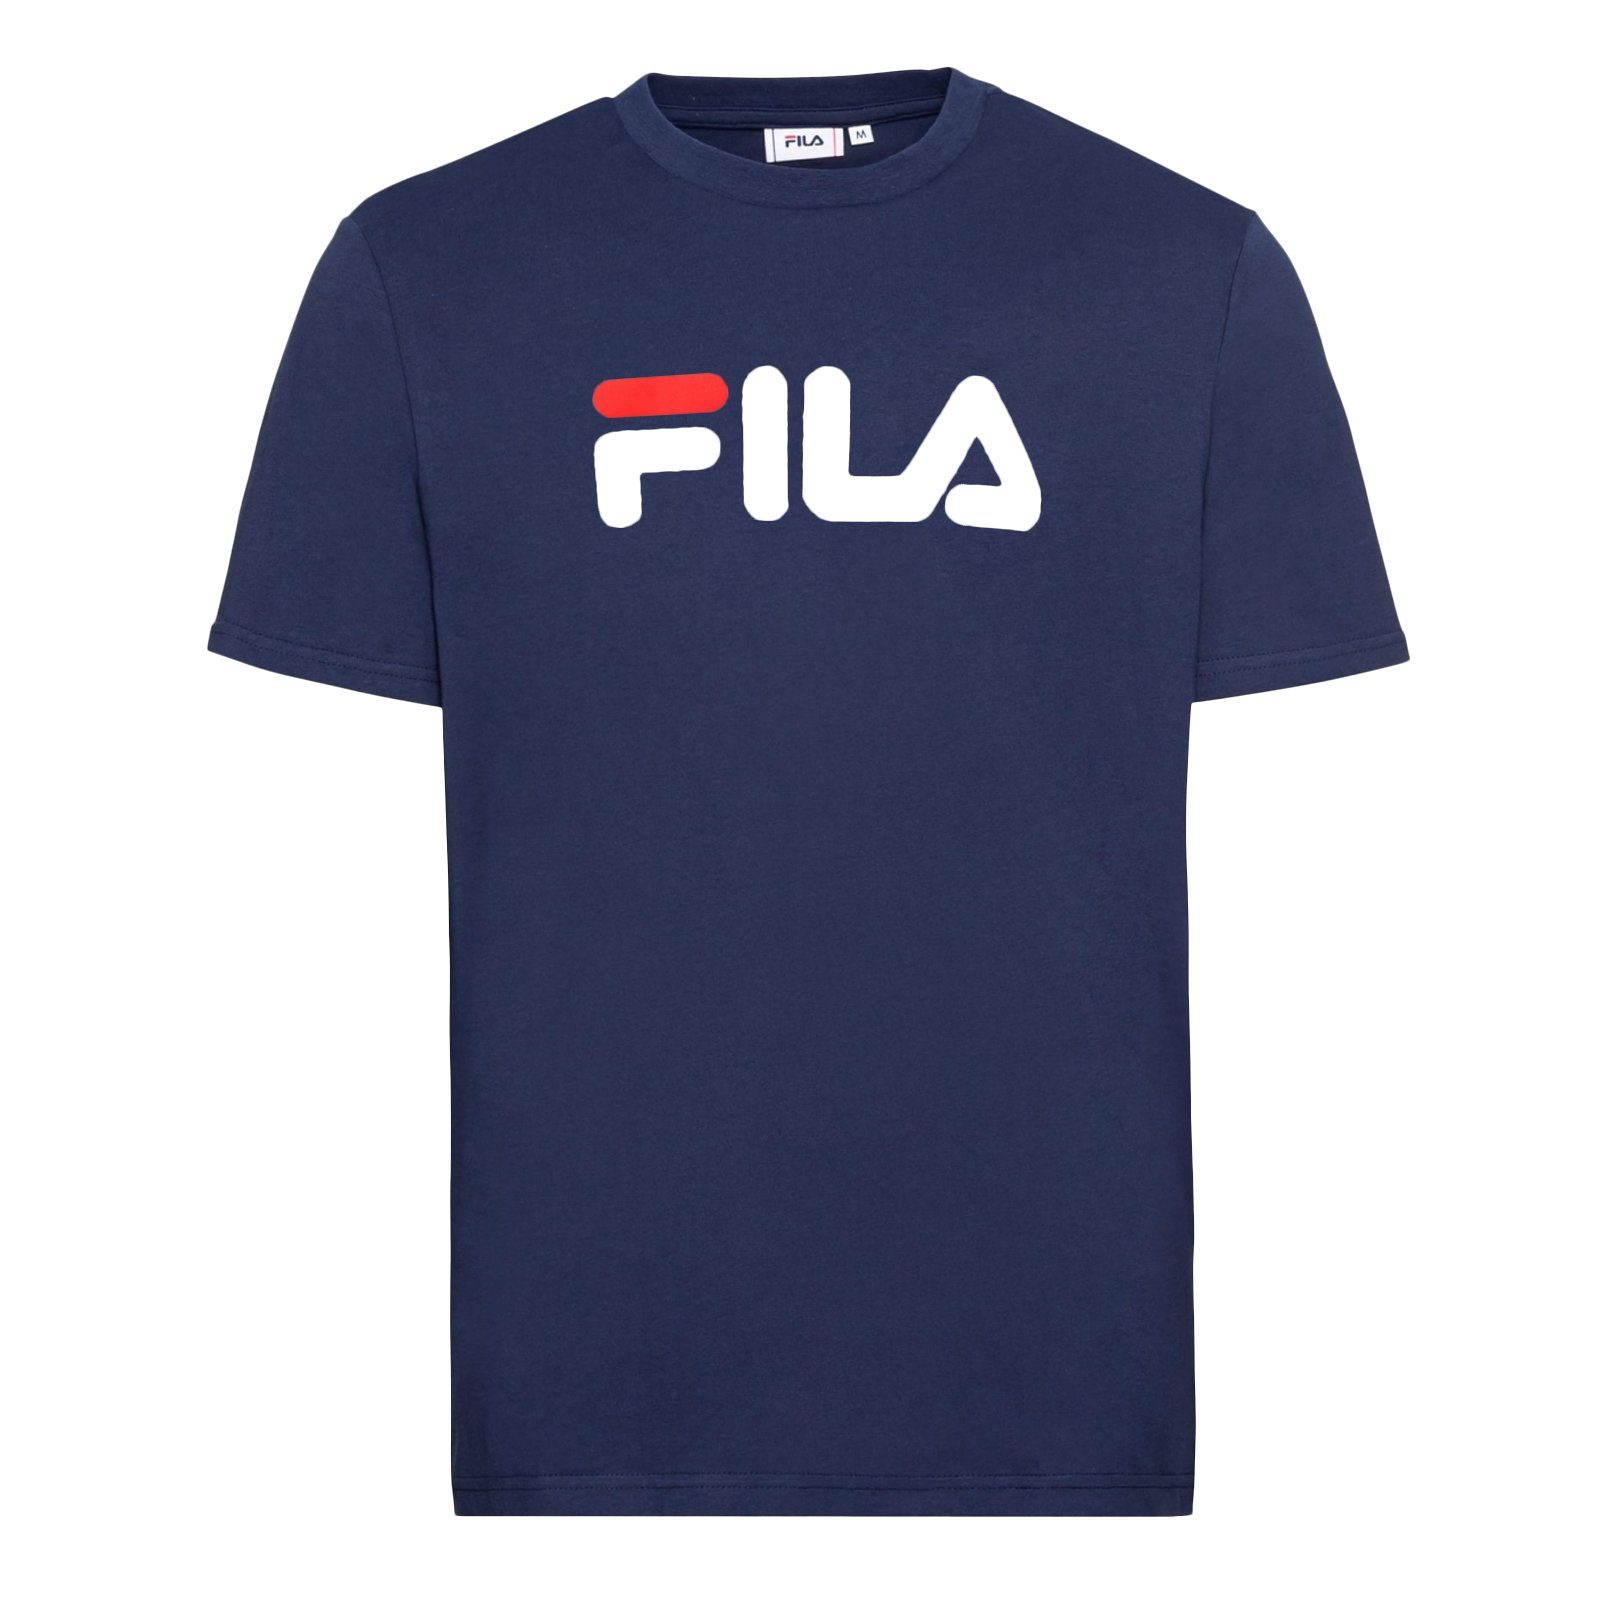 Fila T-Shirt Bellano Tee mit plakativem Markenschriftzug 50001 medieval blue